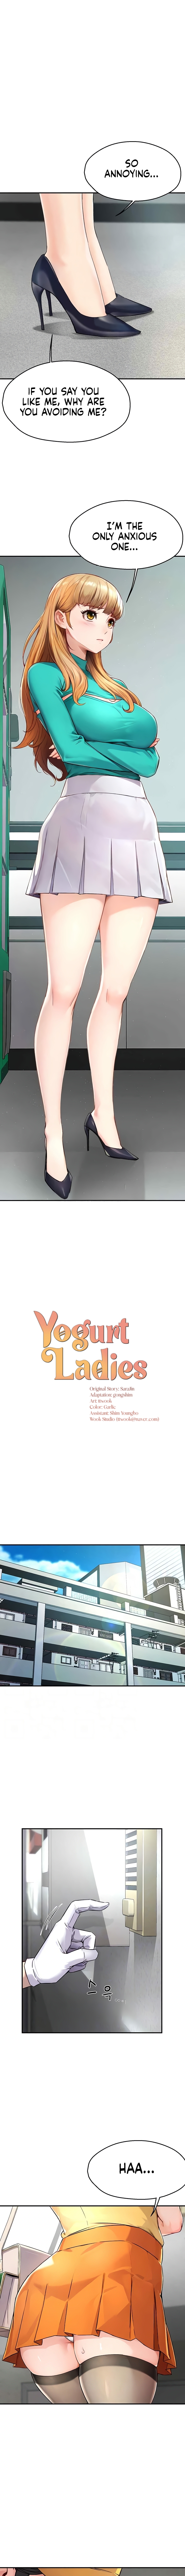 Yogurt Ladies HOT image